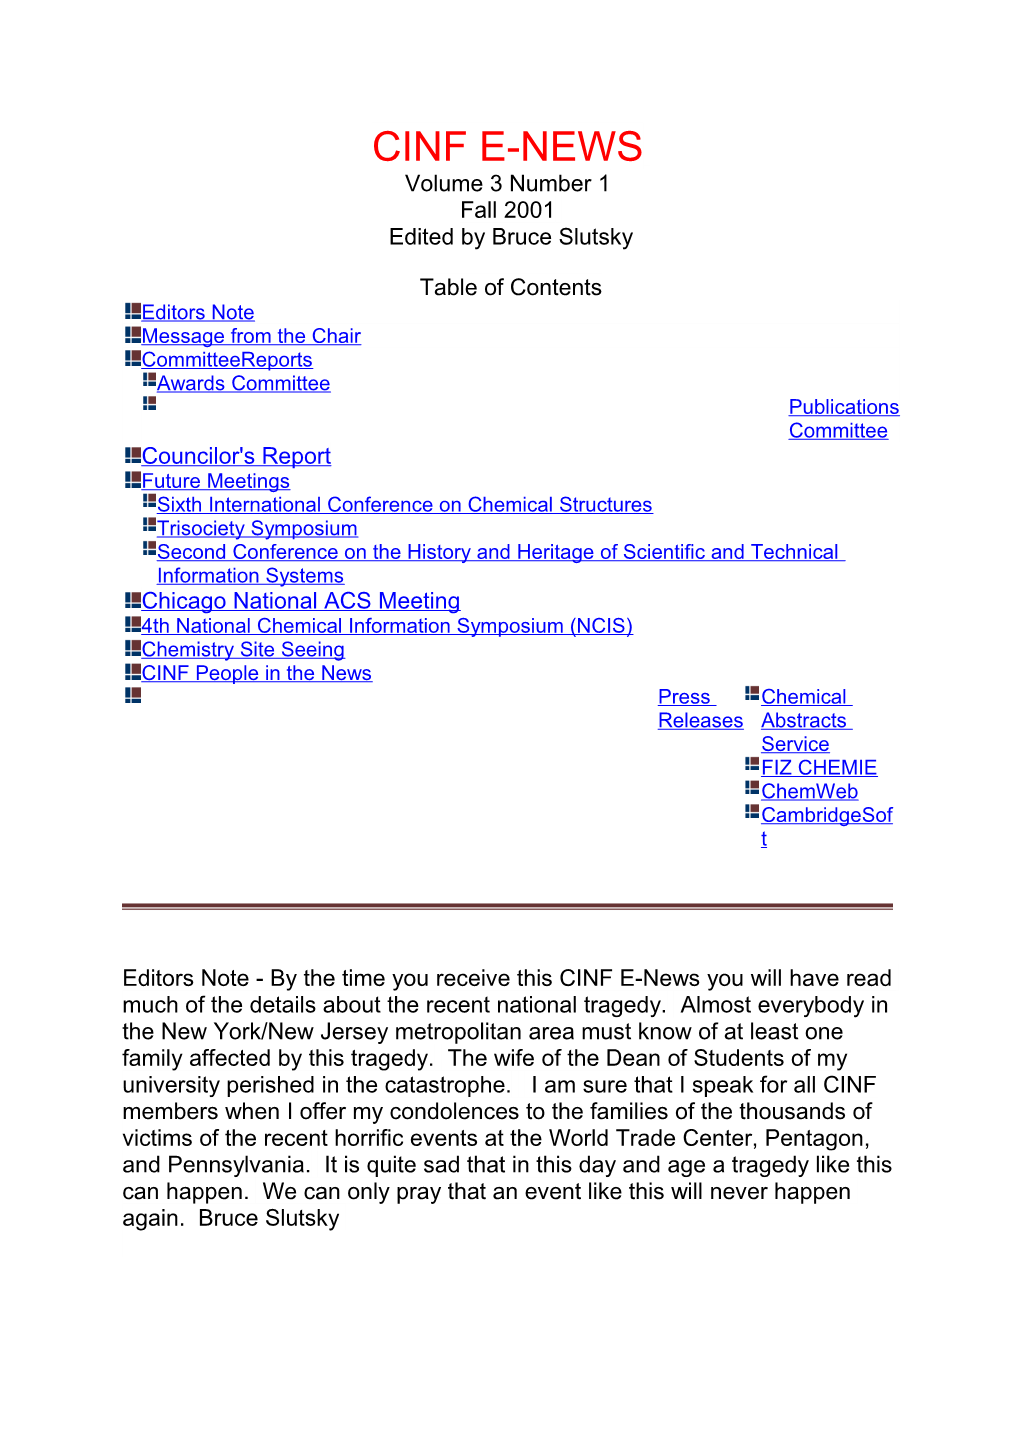 CINF E-NEWS Volume 3 Number 1 Fall 2001 Edited by Bruce Slutsky